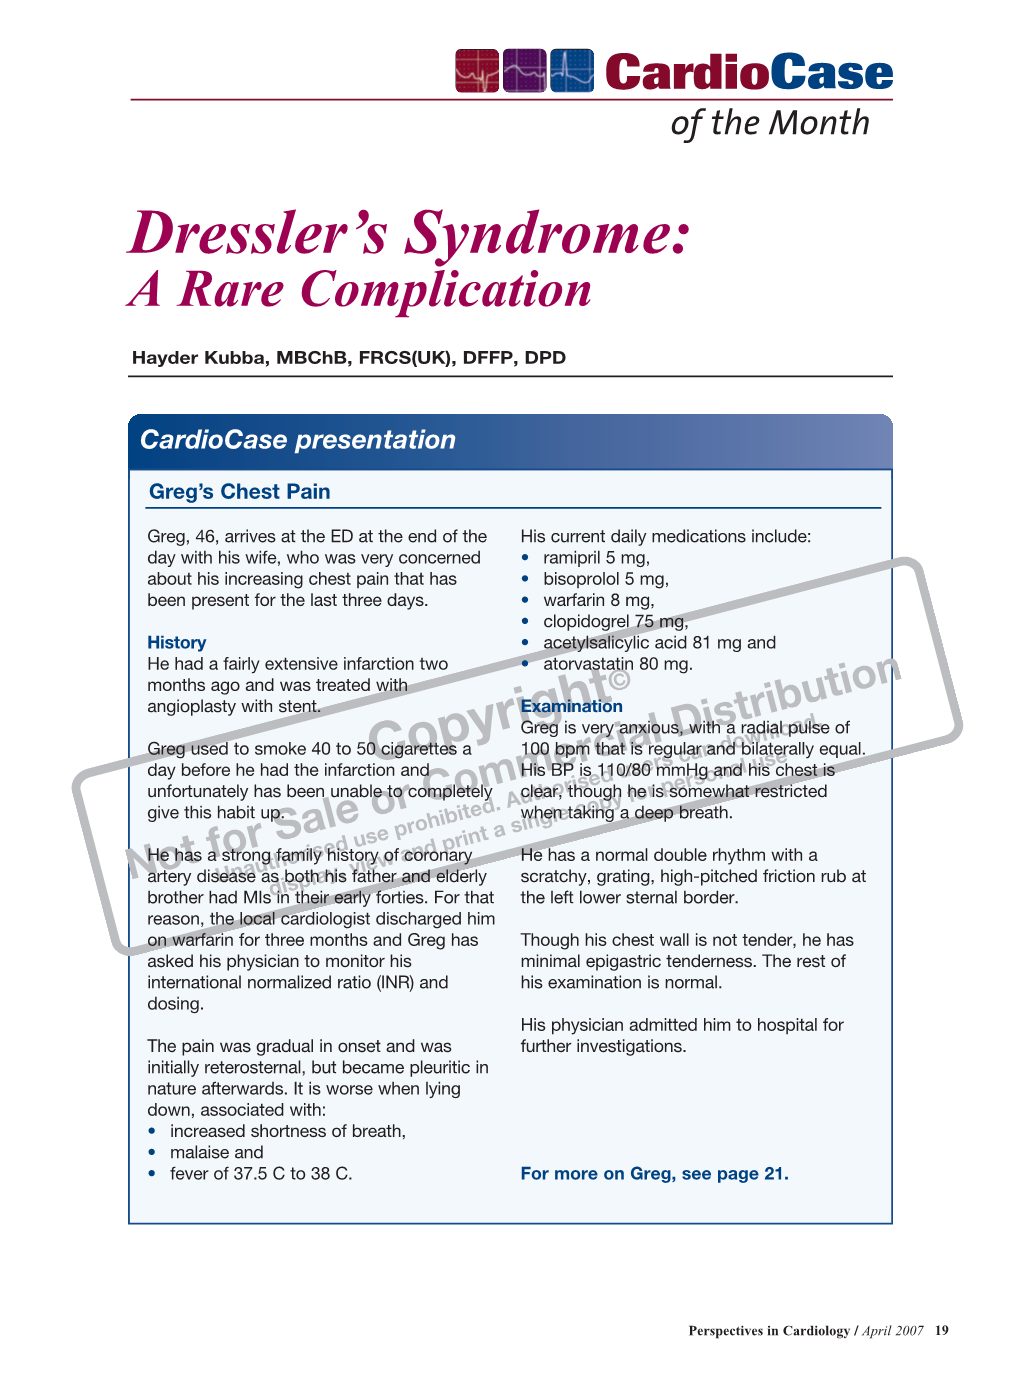 Dressler's Syndrome